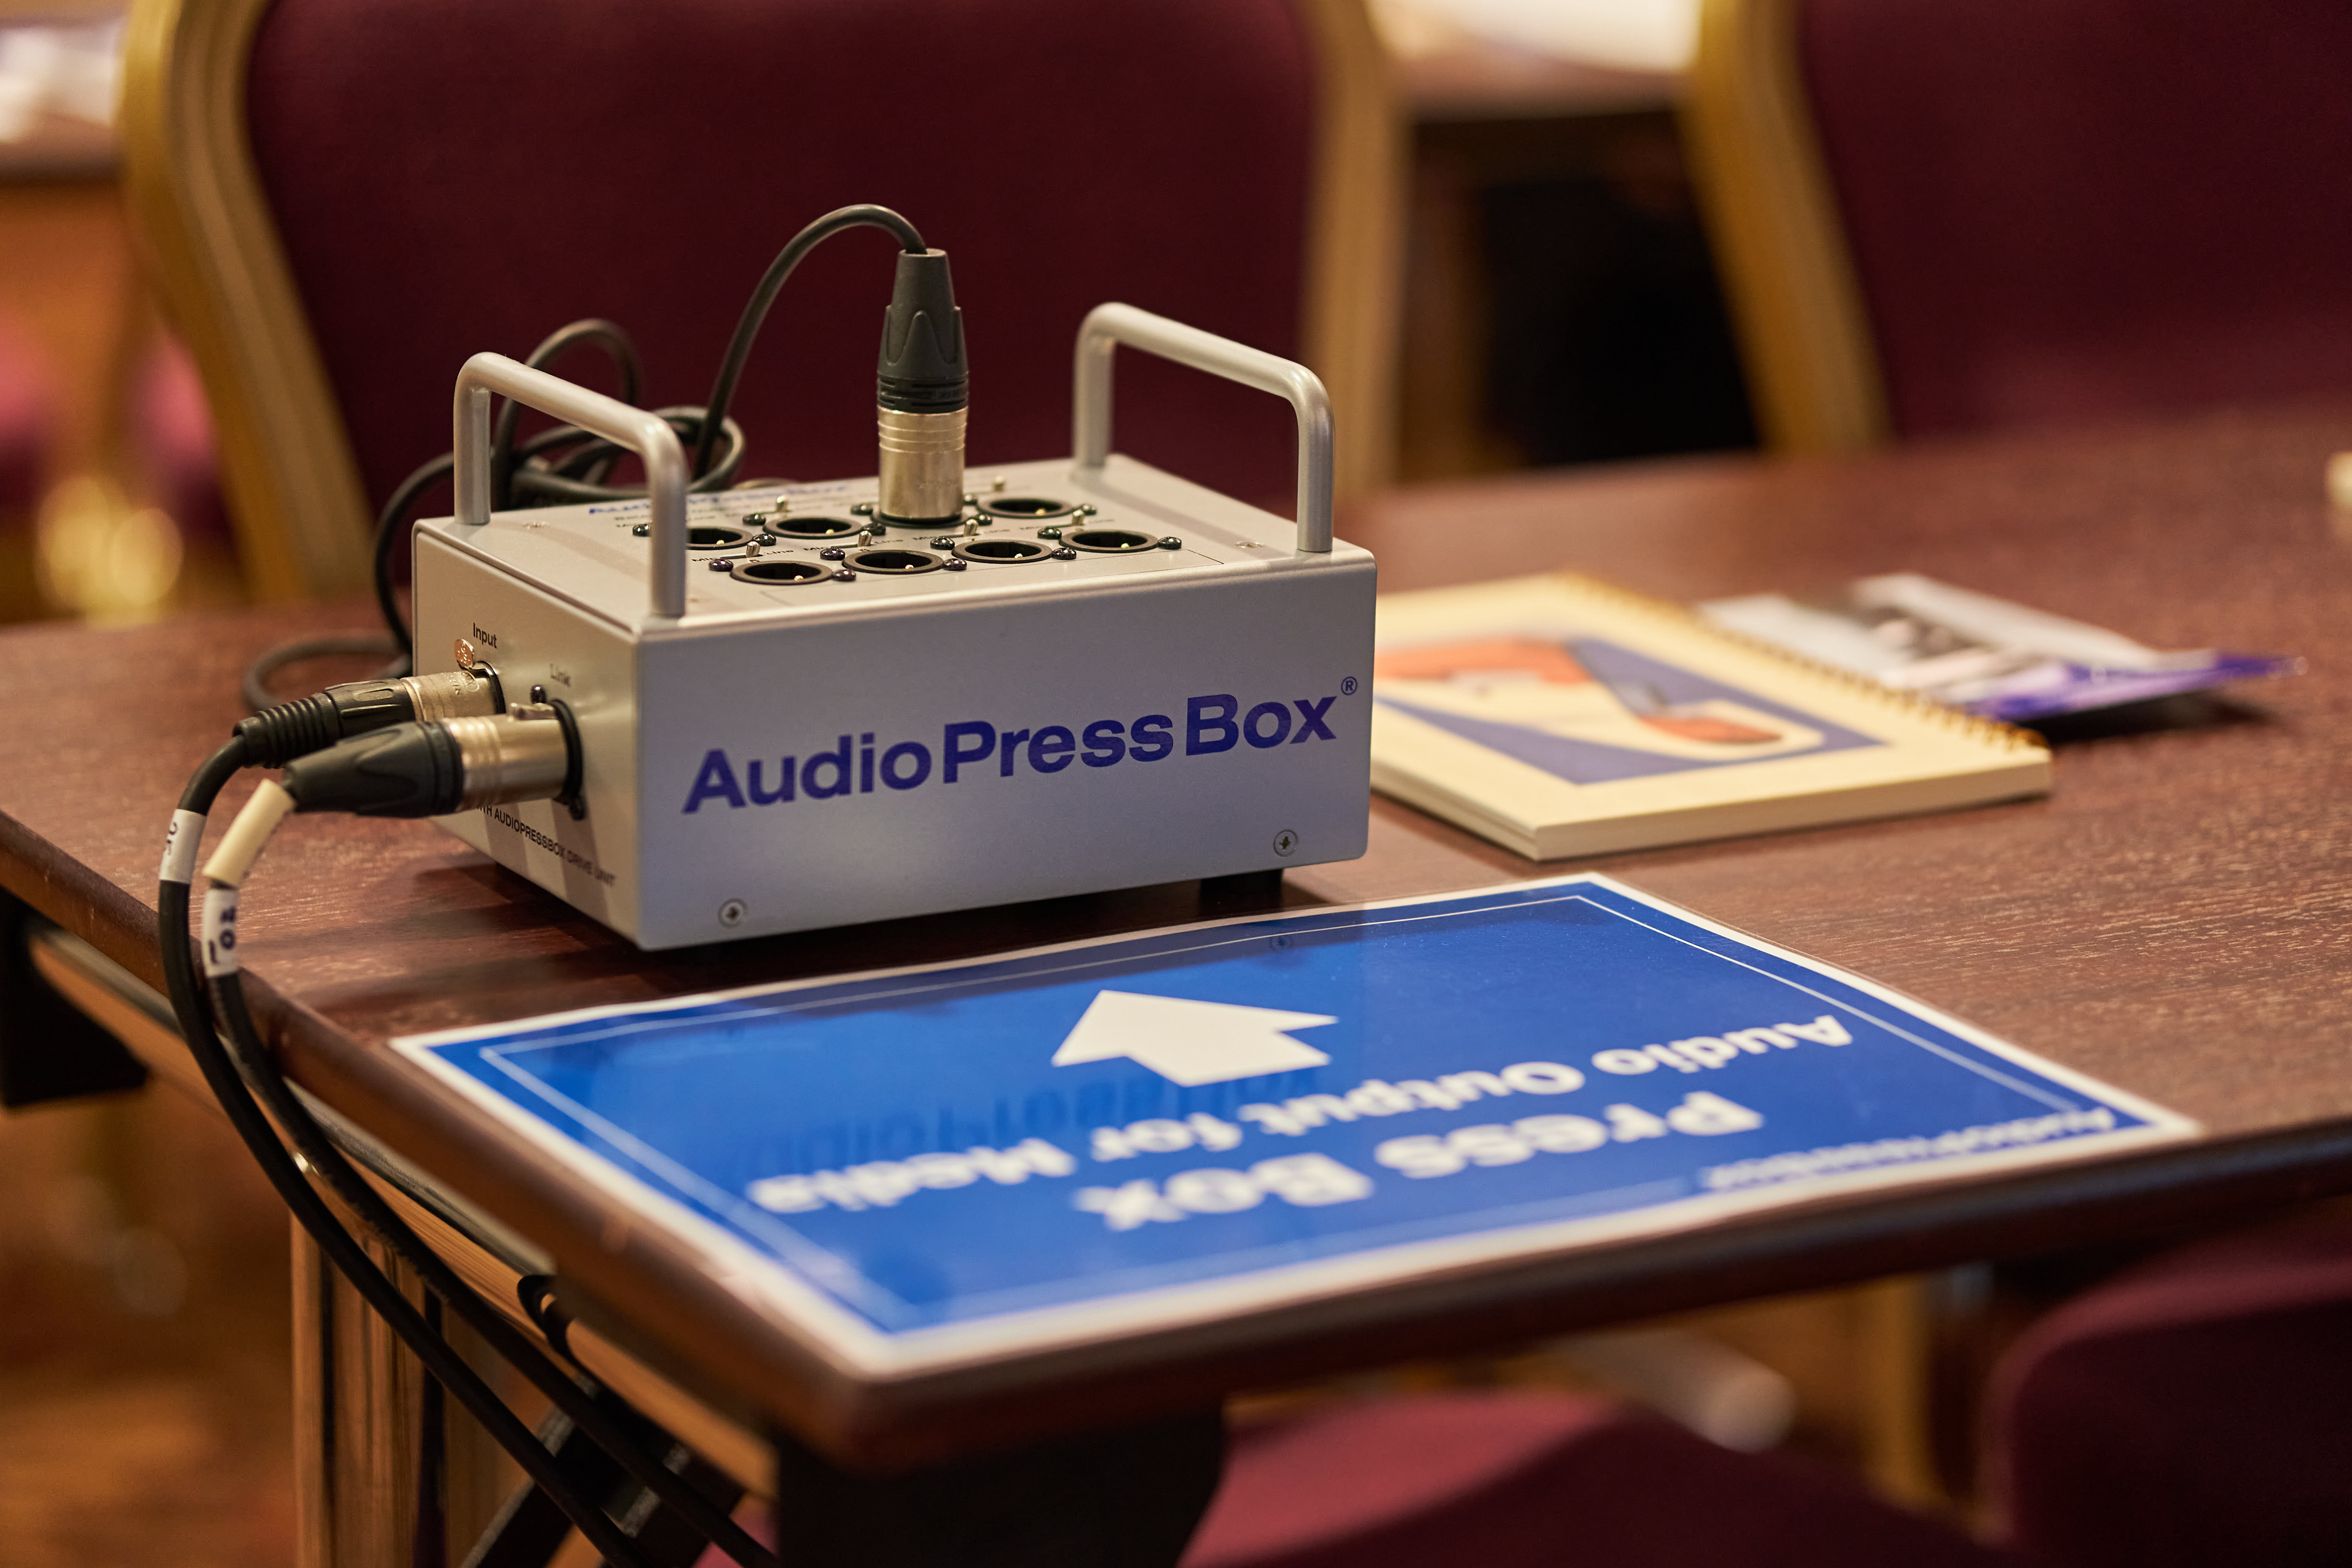 AudioPressBox-press-conference